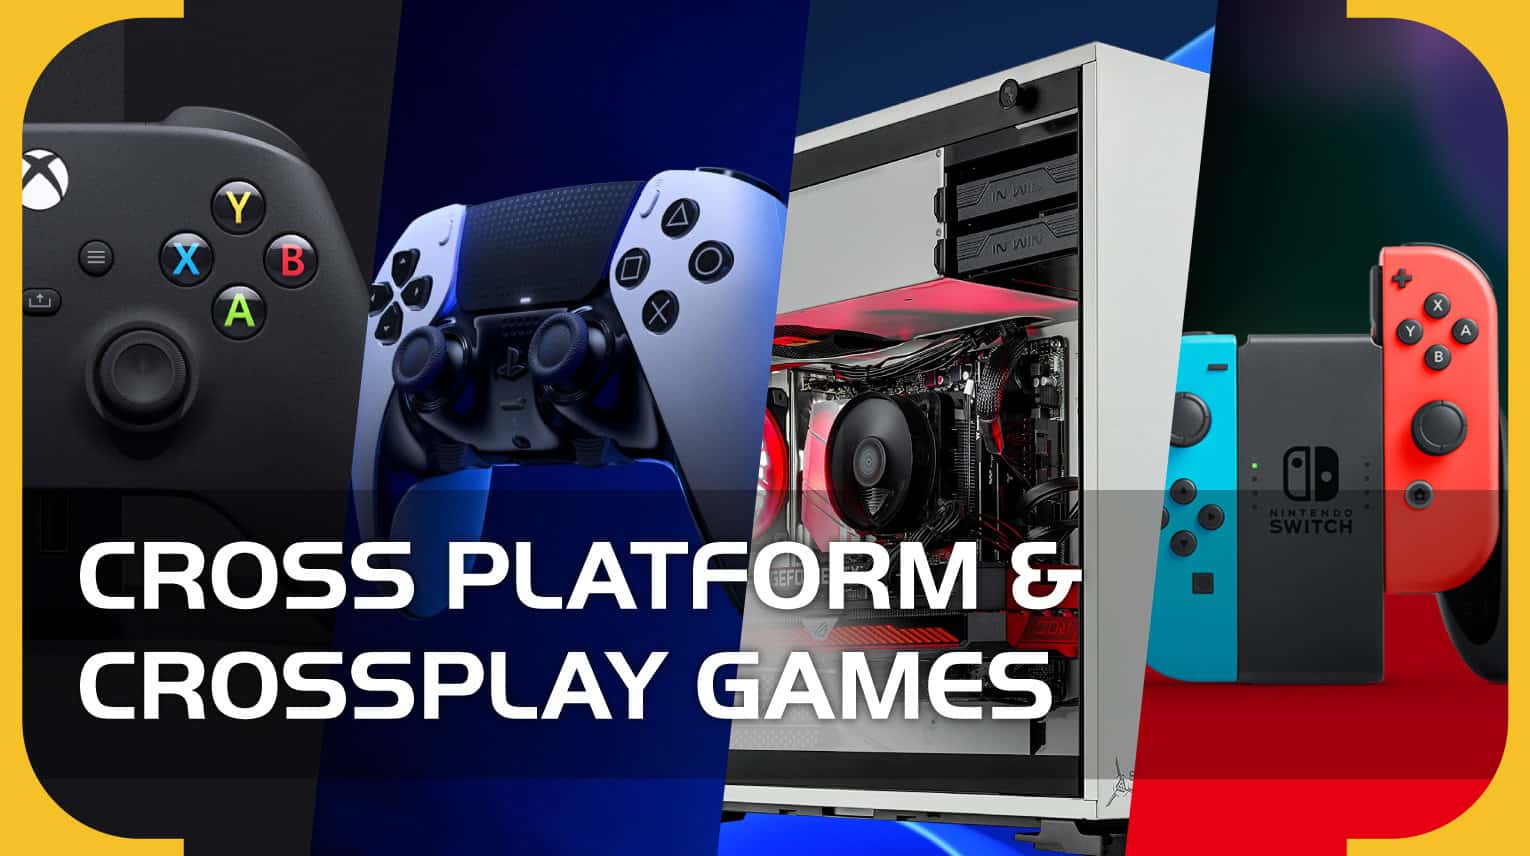 Samengesteld semester hiërarchie Every Cross Platform & Crossplay Game (October 2022) - PS5, Xbox Series X,  PC, PS4, Xbox One, Nintendo Switch) - VideoGamer.com